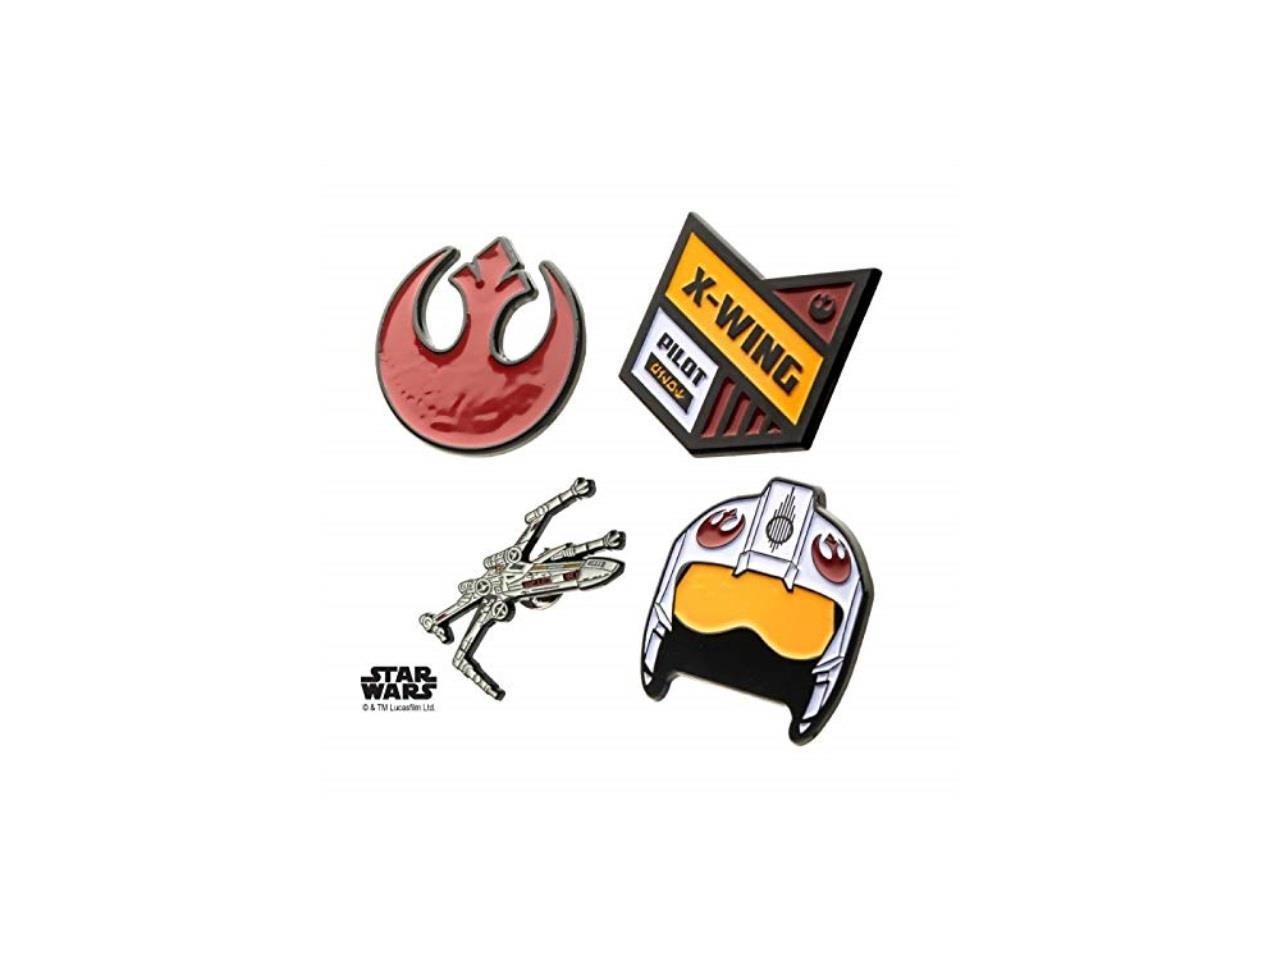 Star Wars Base Metal Rebel Alliance Symbol and X Wing Fighter Lapel Pin Set 